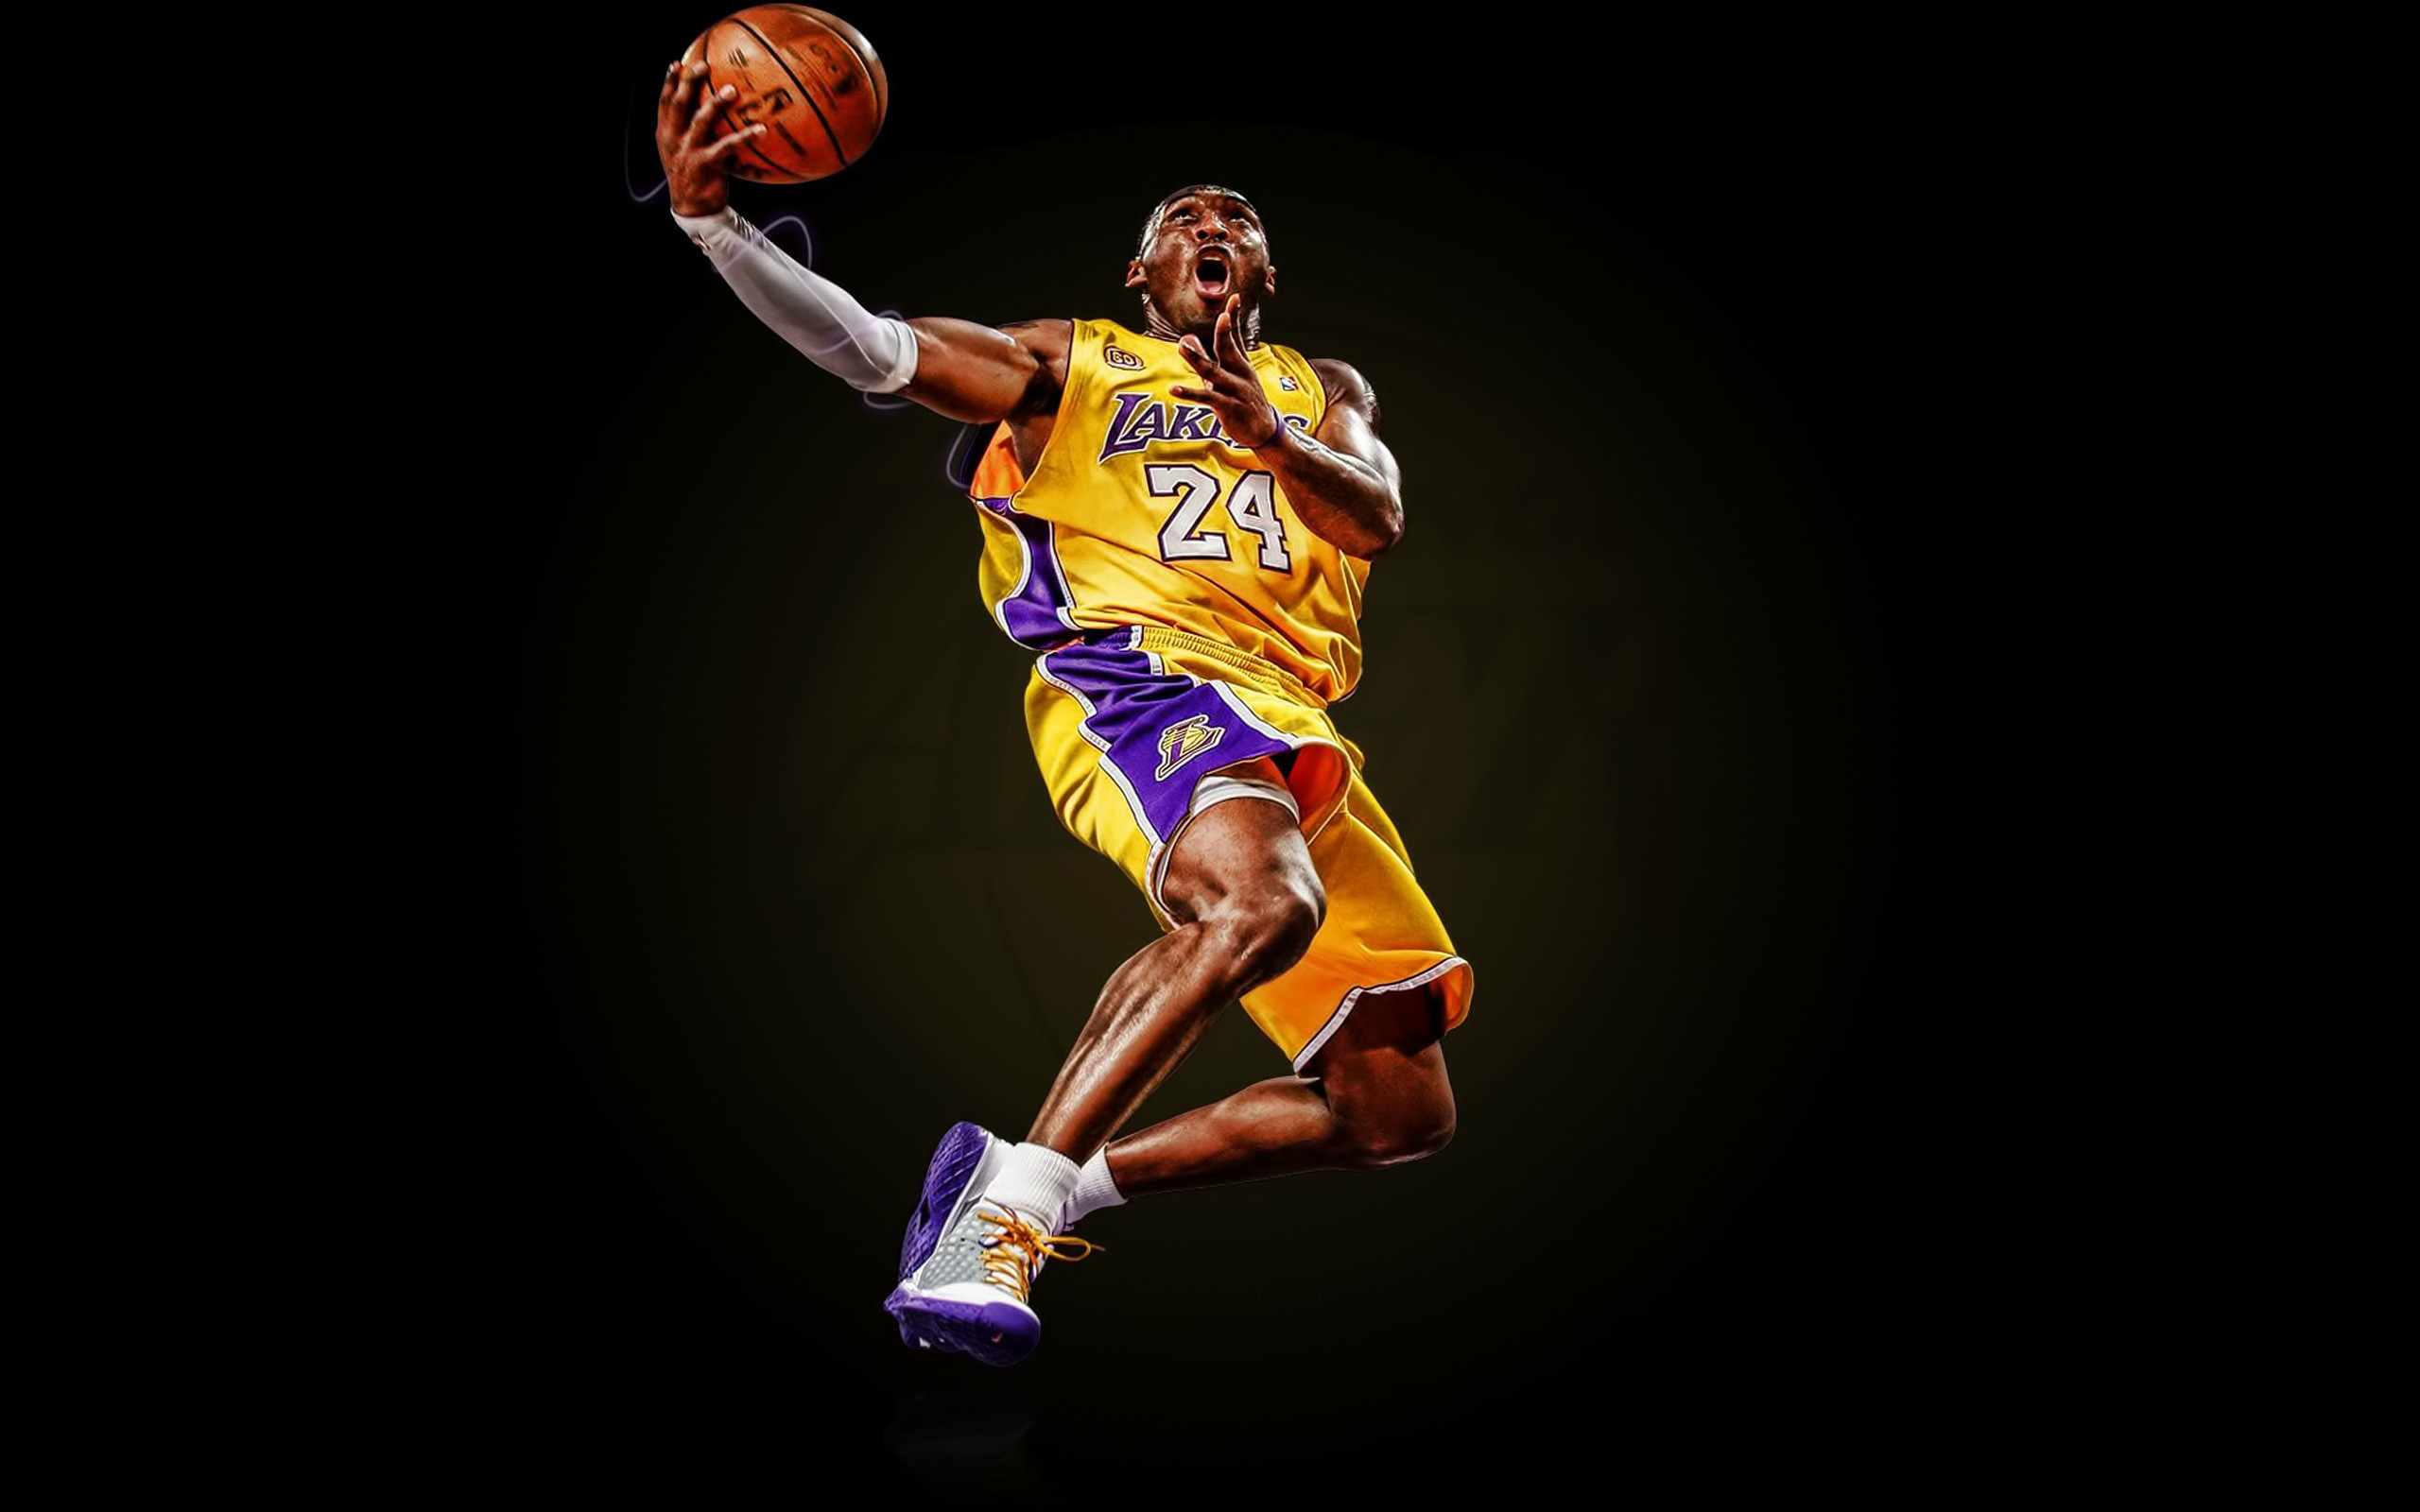 2560x1600 ... backgrounds 1920x1080 Kobe bryant photos basketball player wide ...